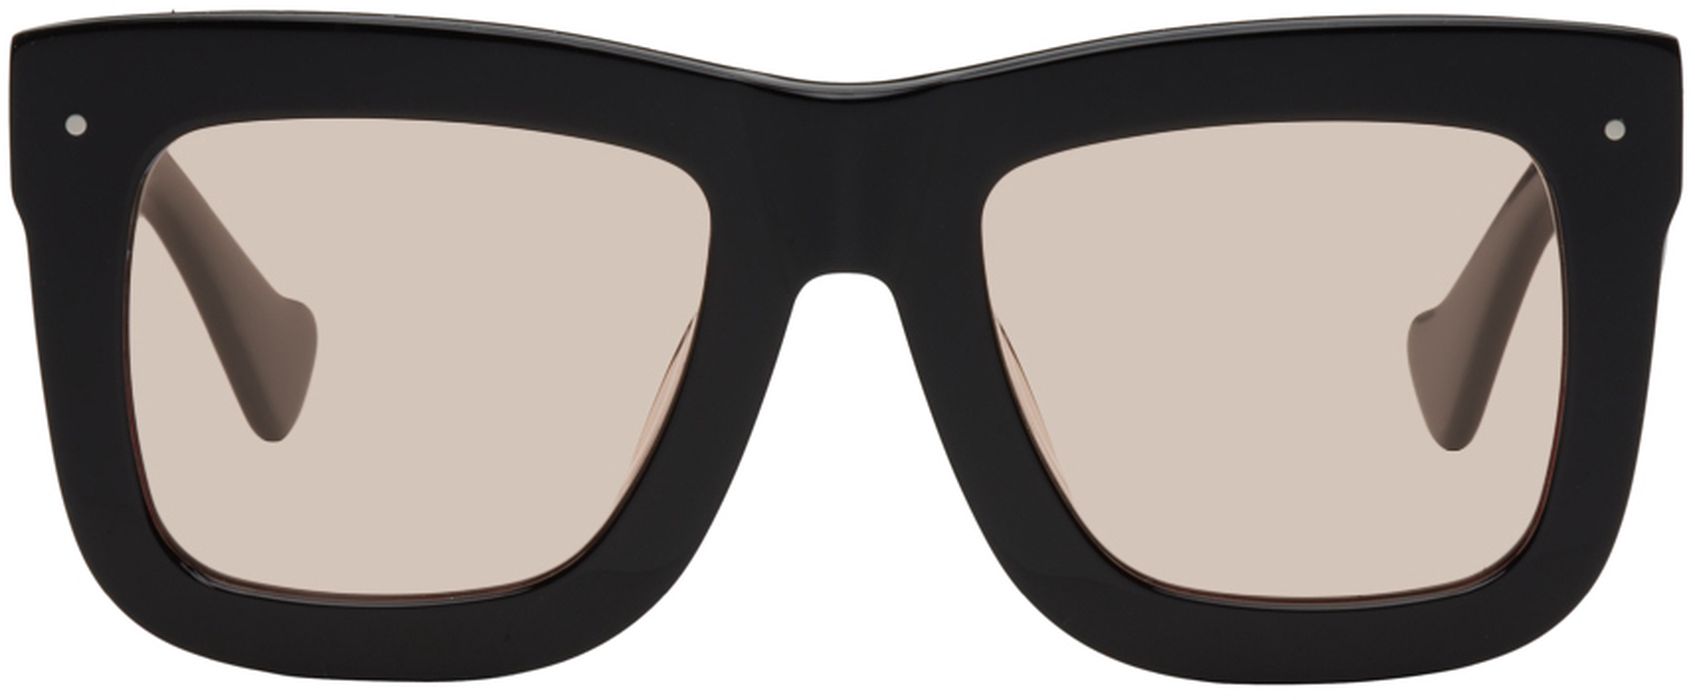 Grey Ant Black Status Sunglasses